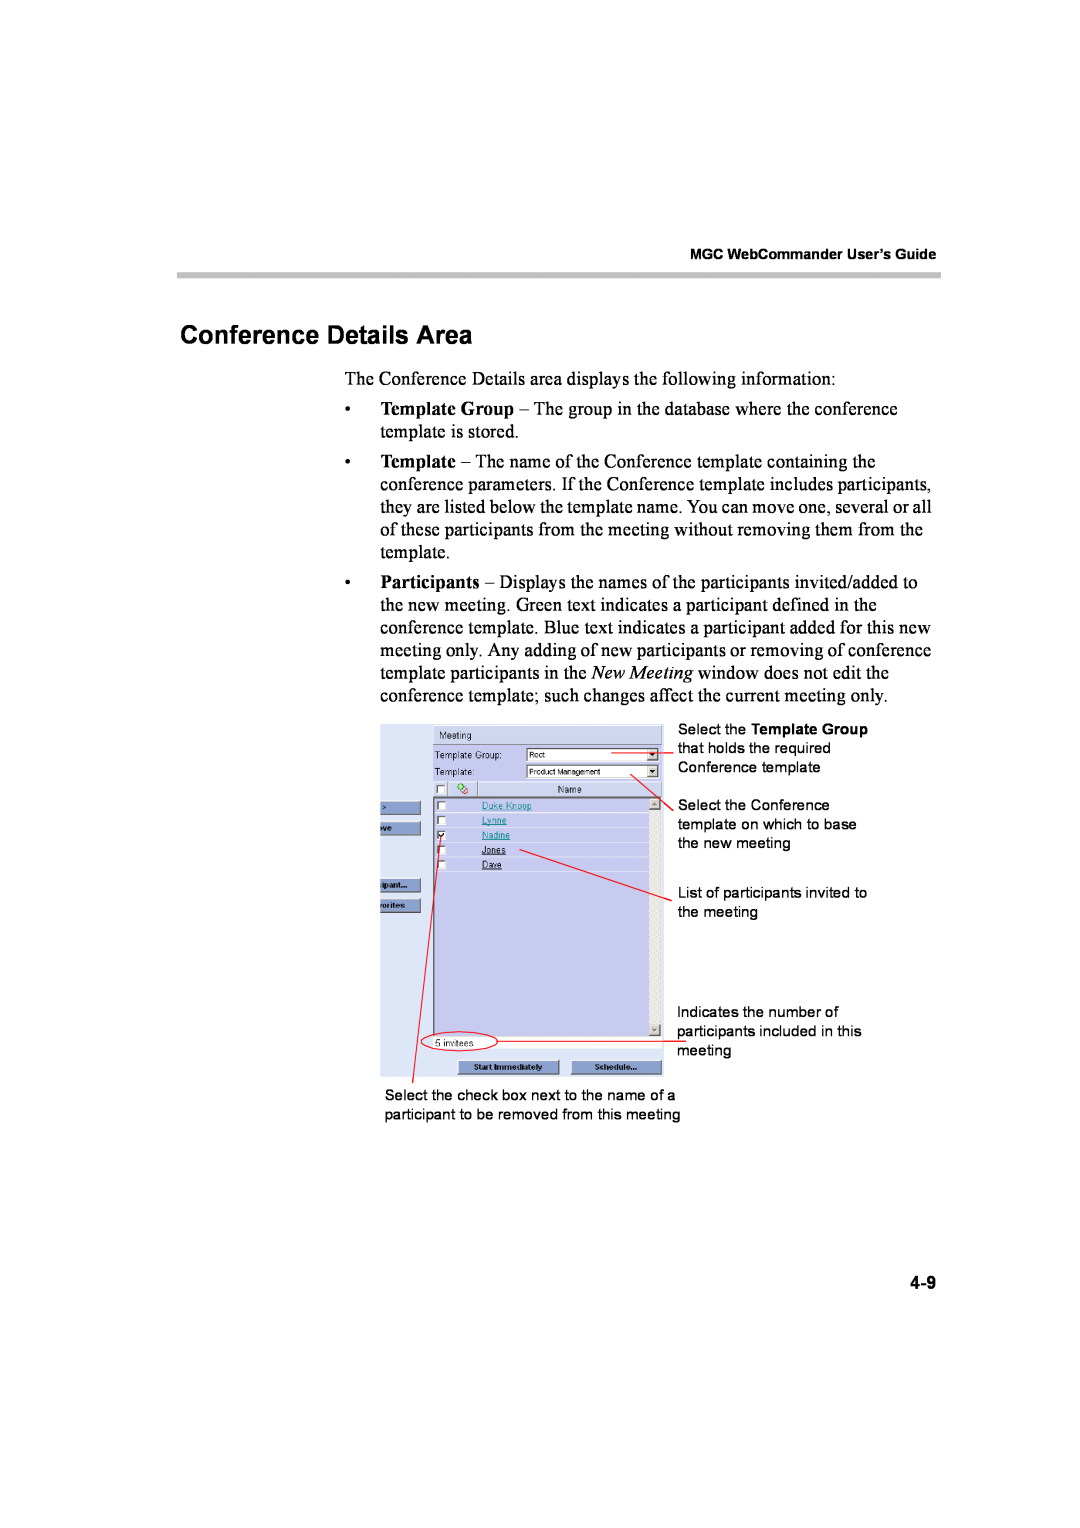 Polycom 8 manual Conference Details Area, MGC WebCommander User’s Guide 